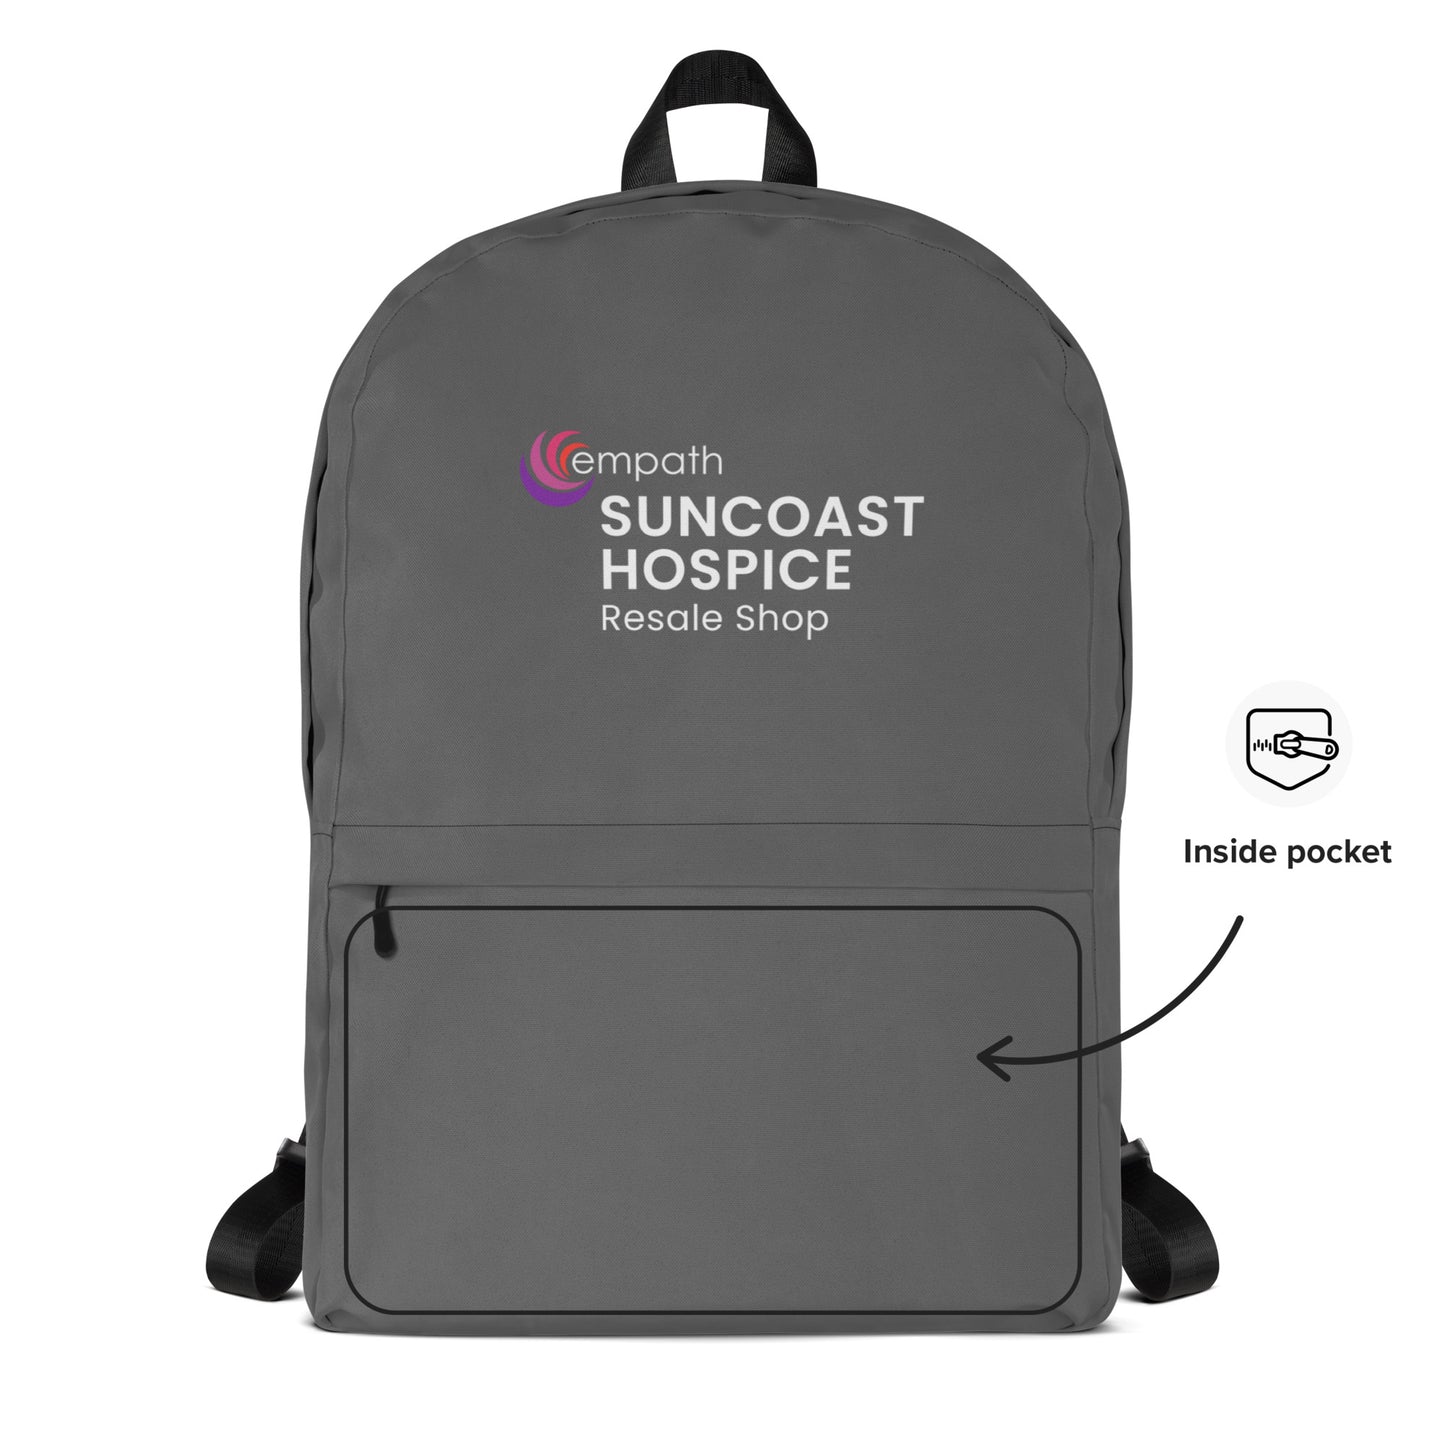 All-Over Print Backpack - Suncoast Hospice Resale Shop